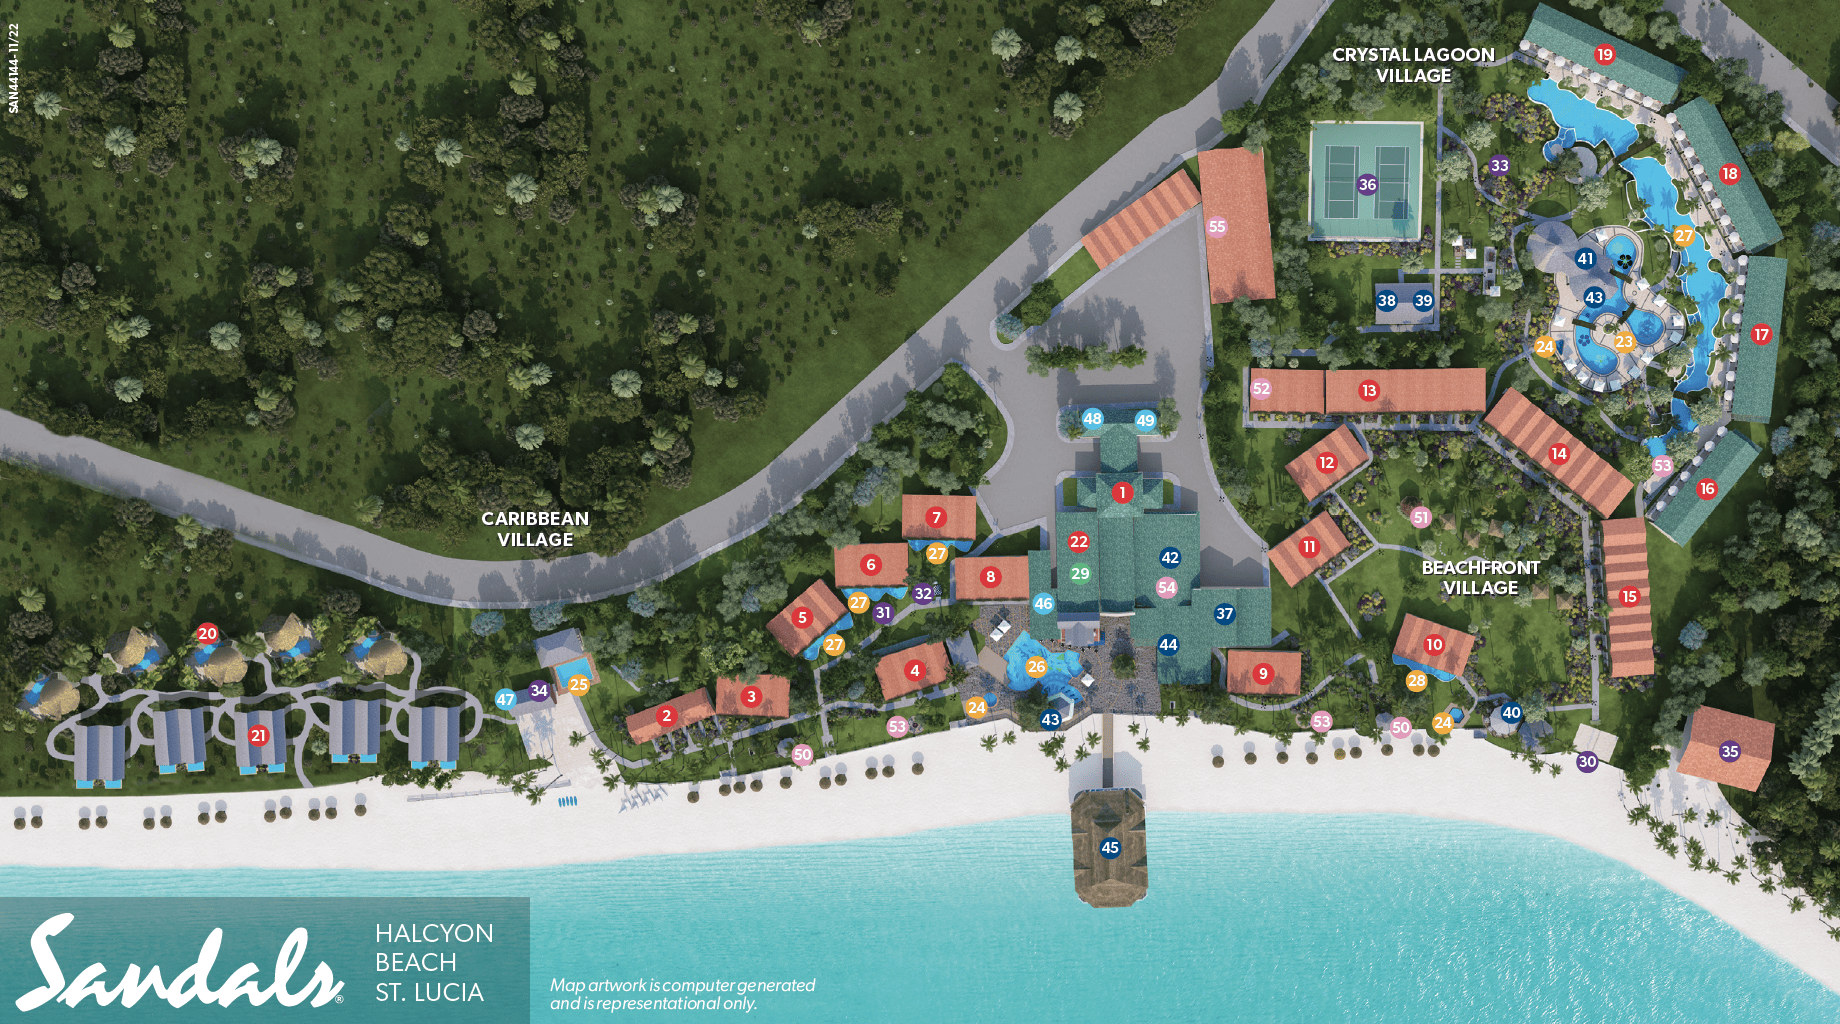 Sandals Resort Map Halcyon Beach St. Lucia